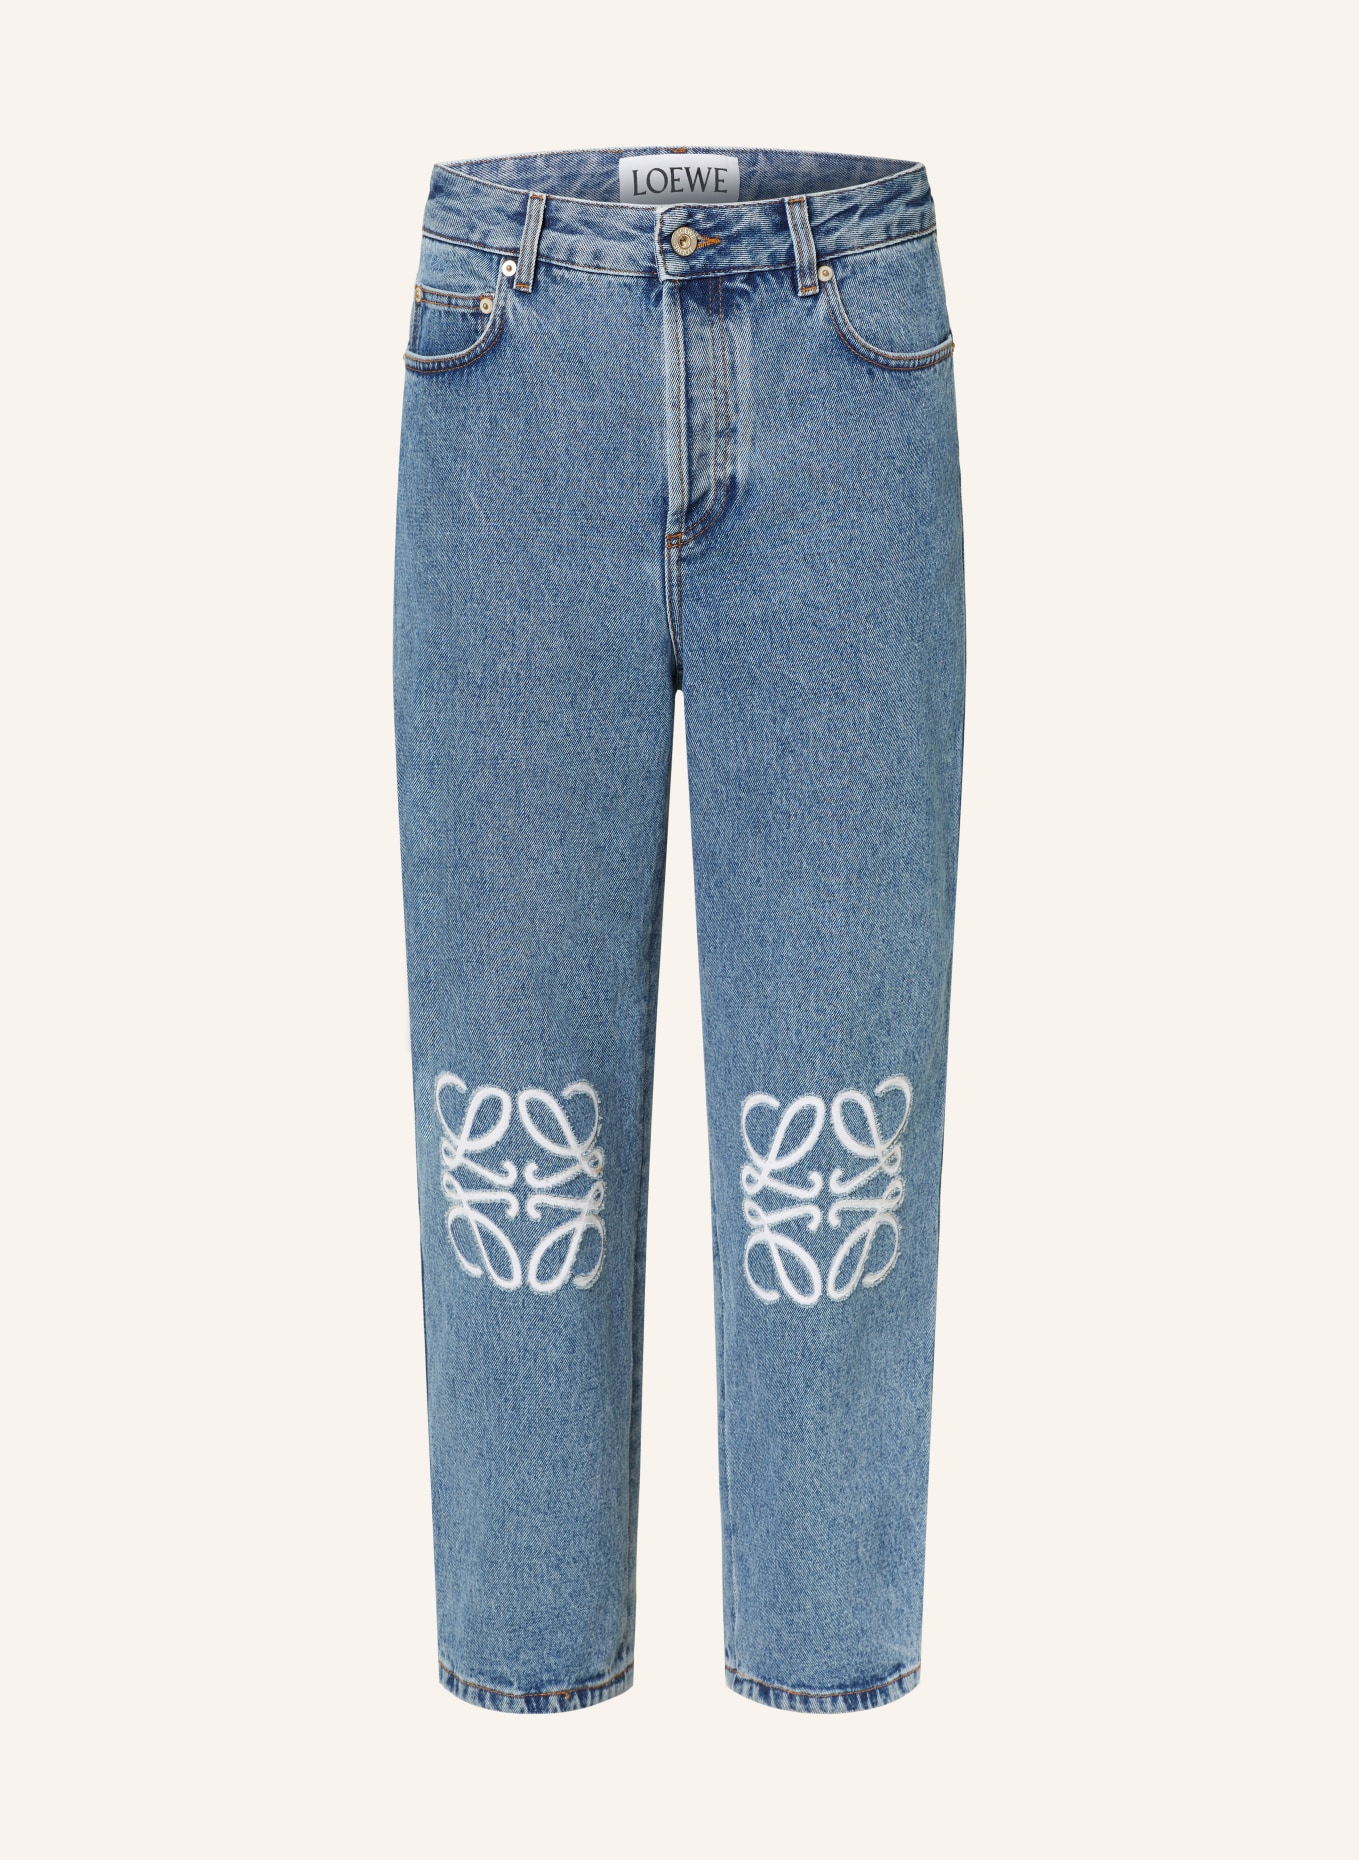 LOEWE 7/8-Jeans ANAGRAM, Farbe: 5475 MID BLUE DENIM (Bild 1)